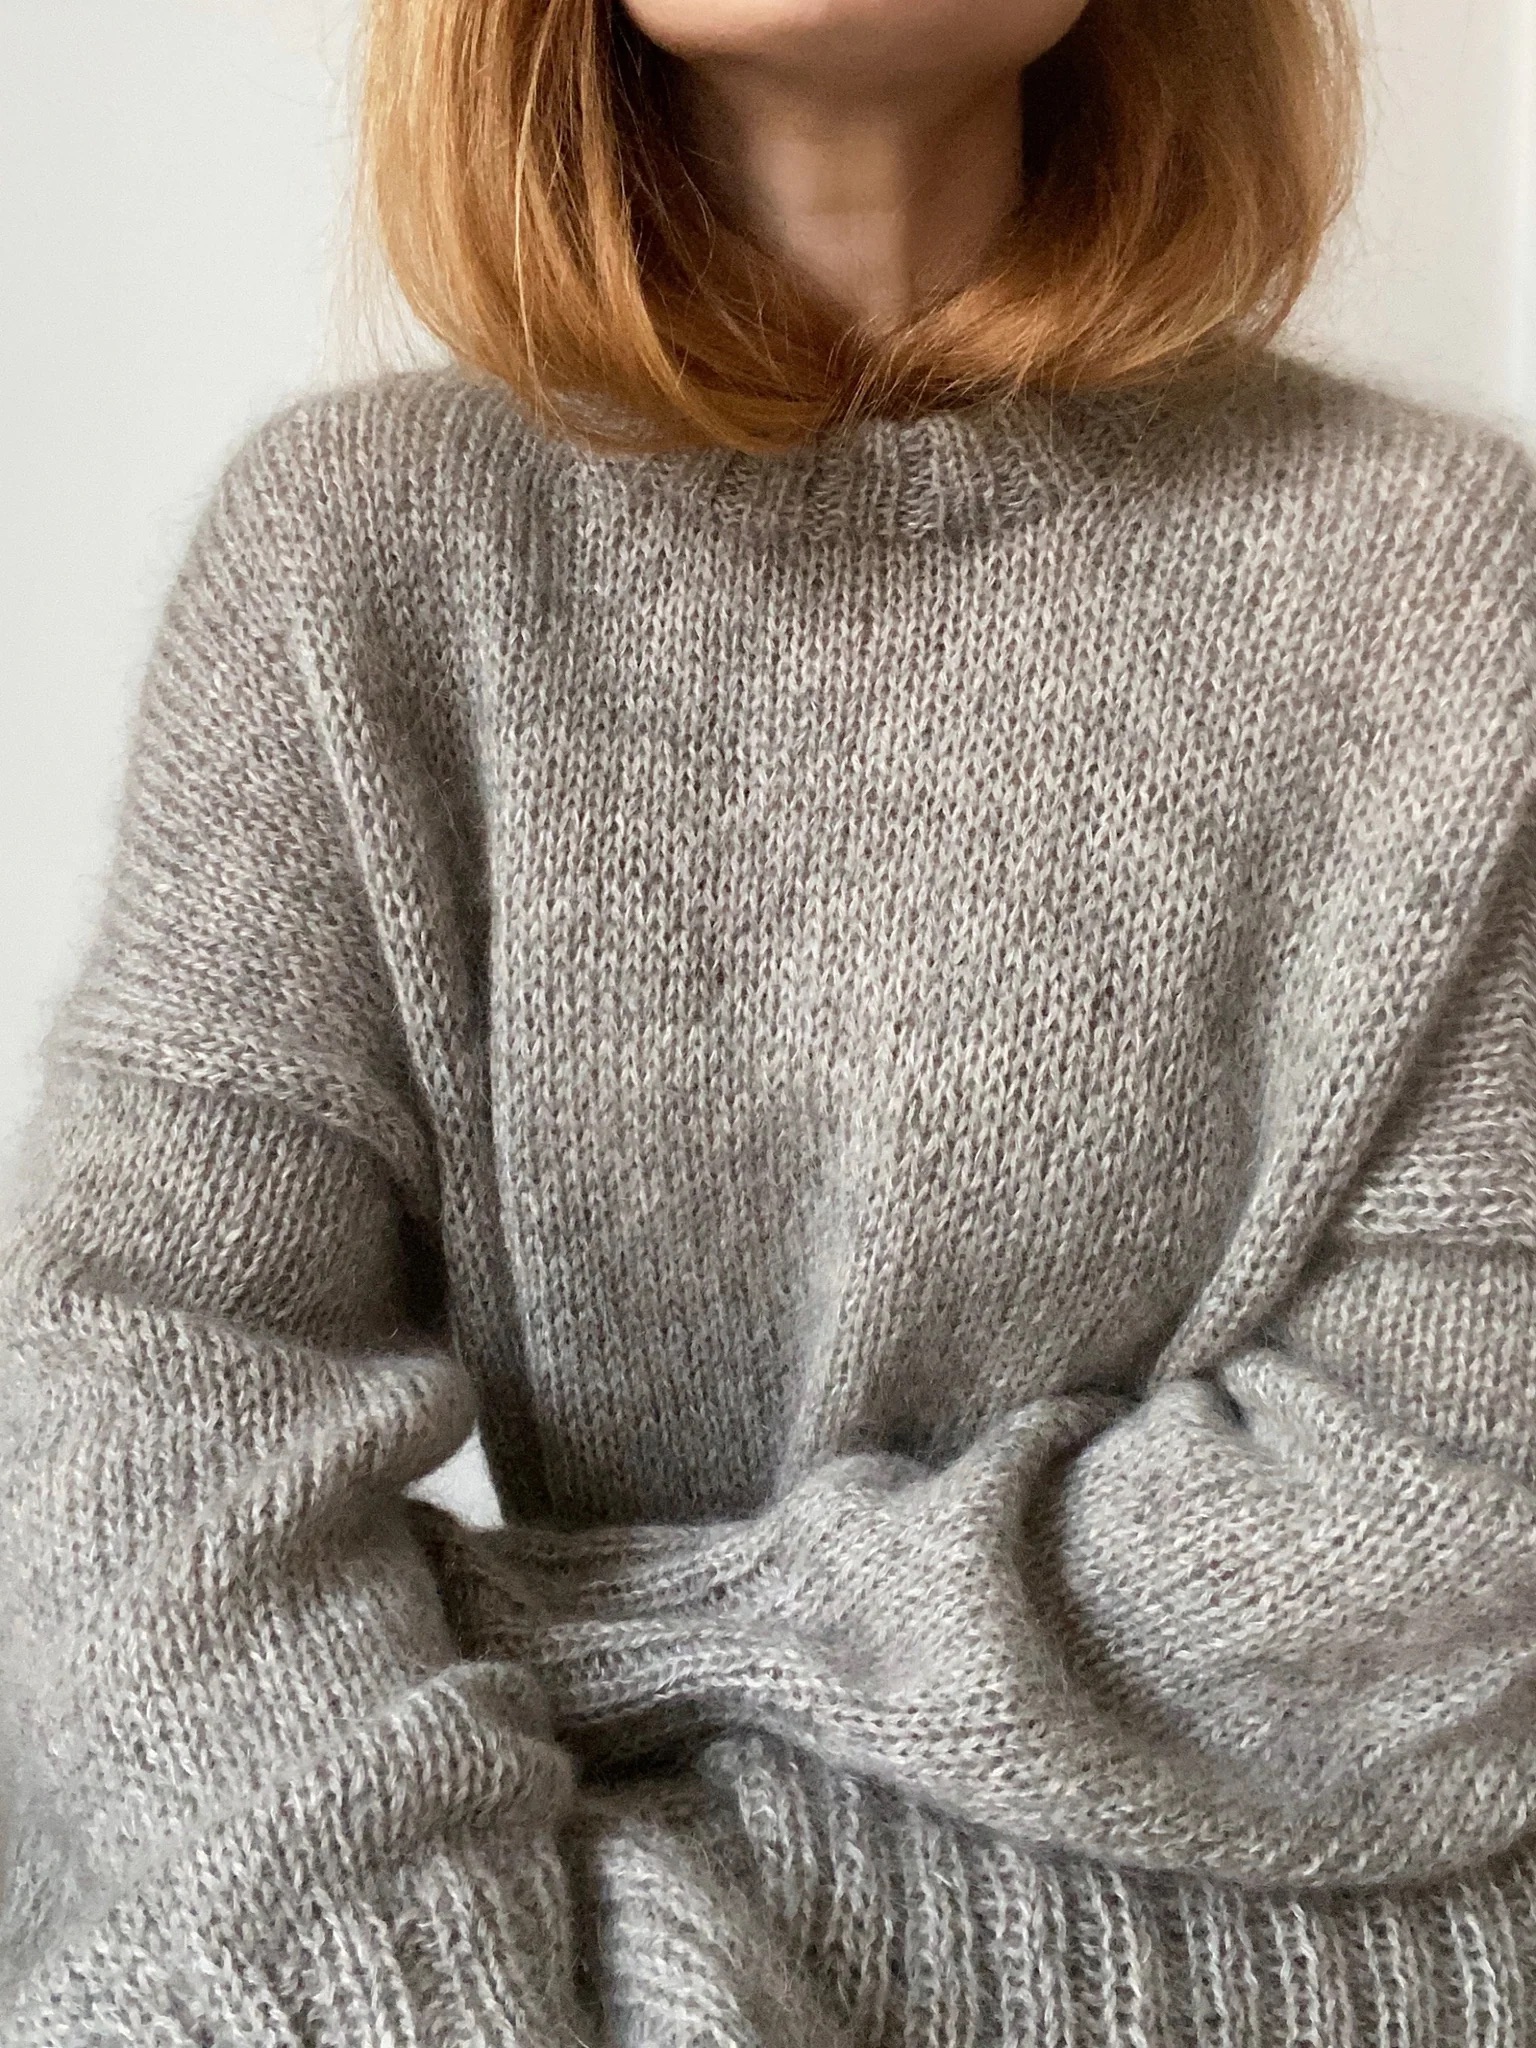 Strickset | Sweater No. 14